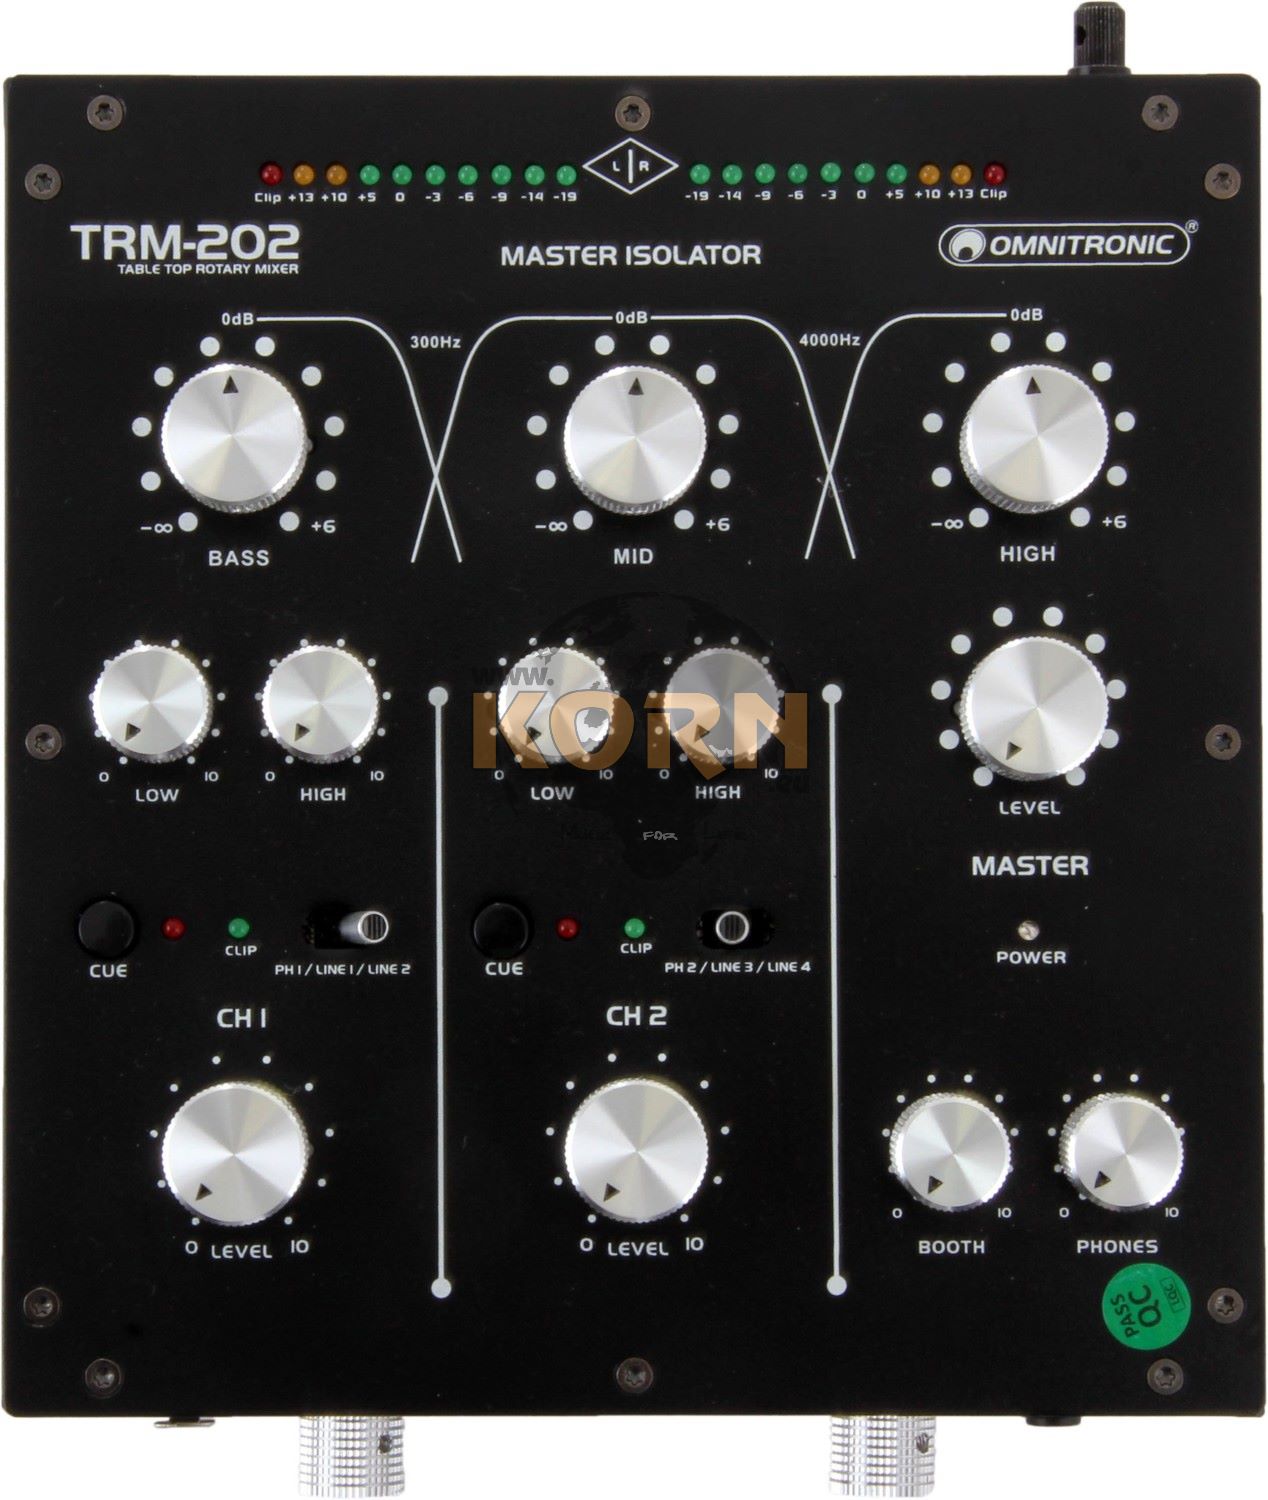 trm-202 - Omnitronic trm-202 - Audiofanzine